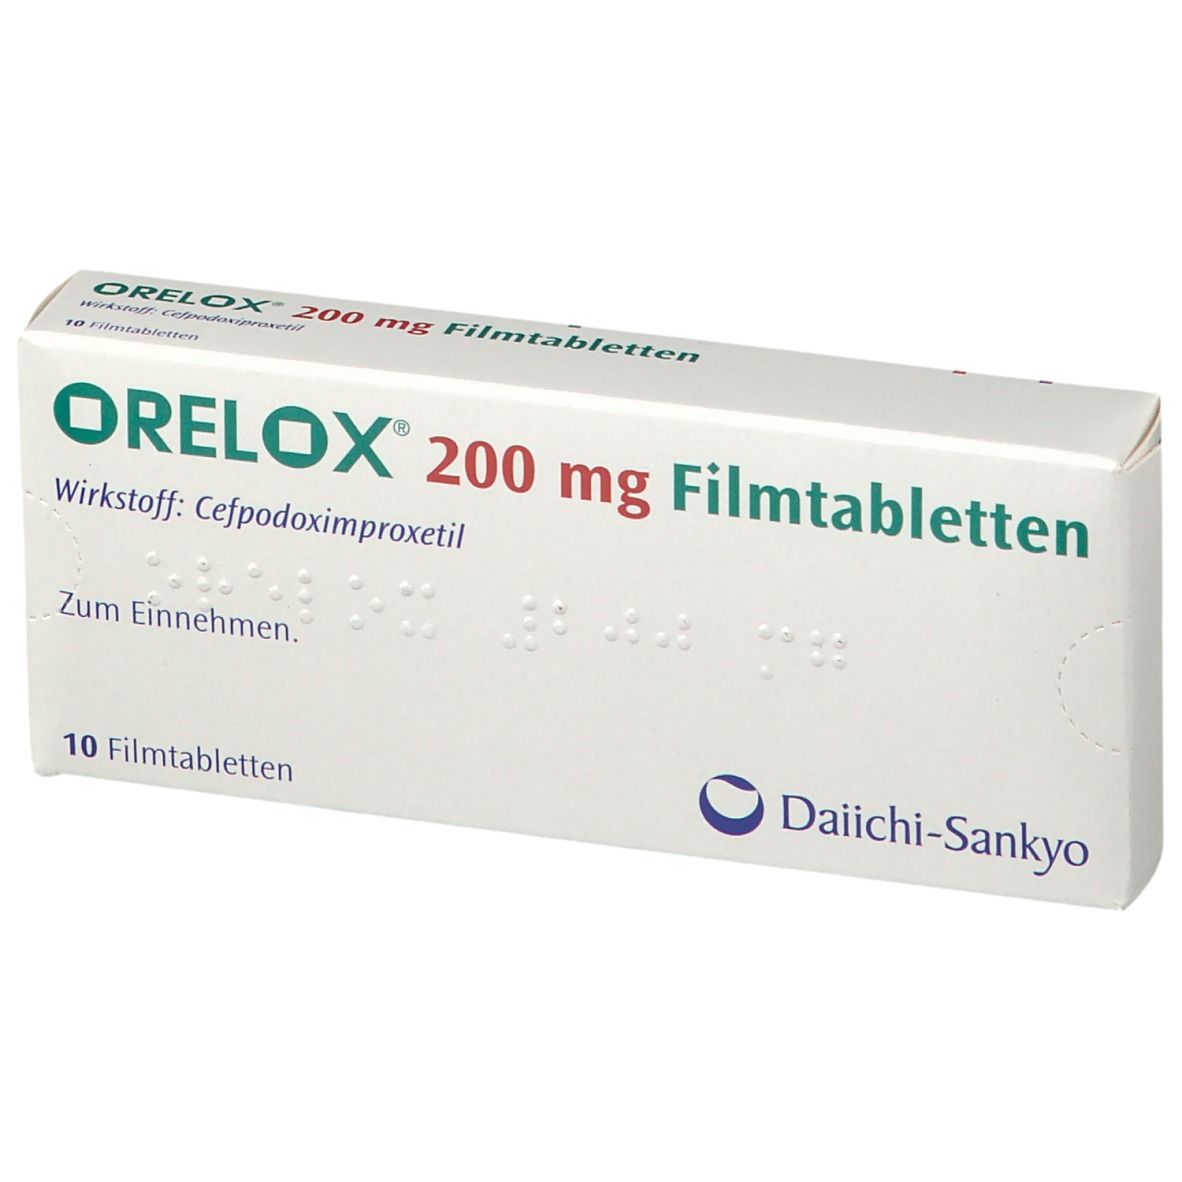 ORELOX® 200 mg